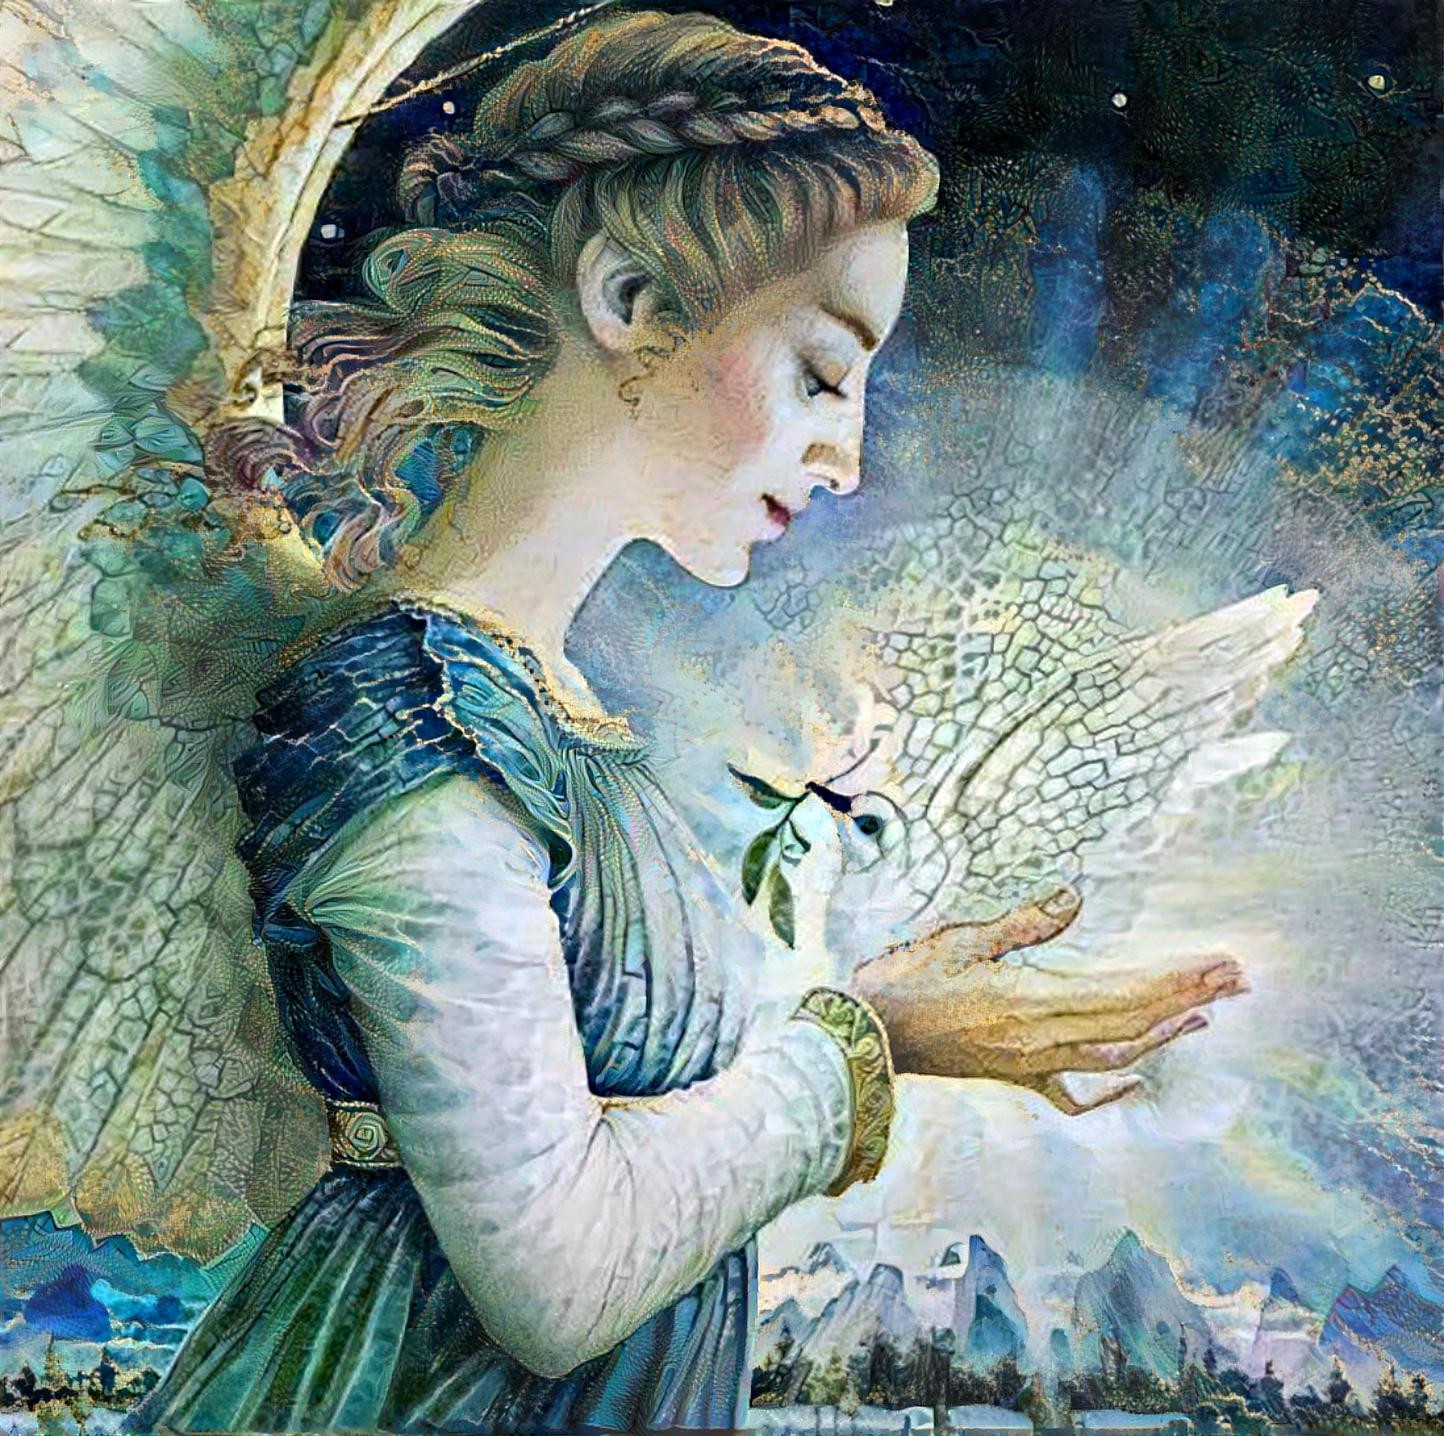 Angel of peace